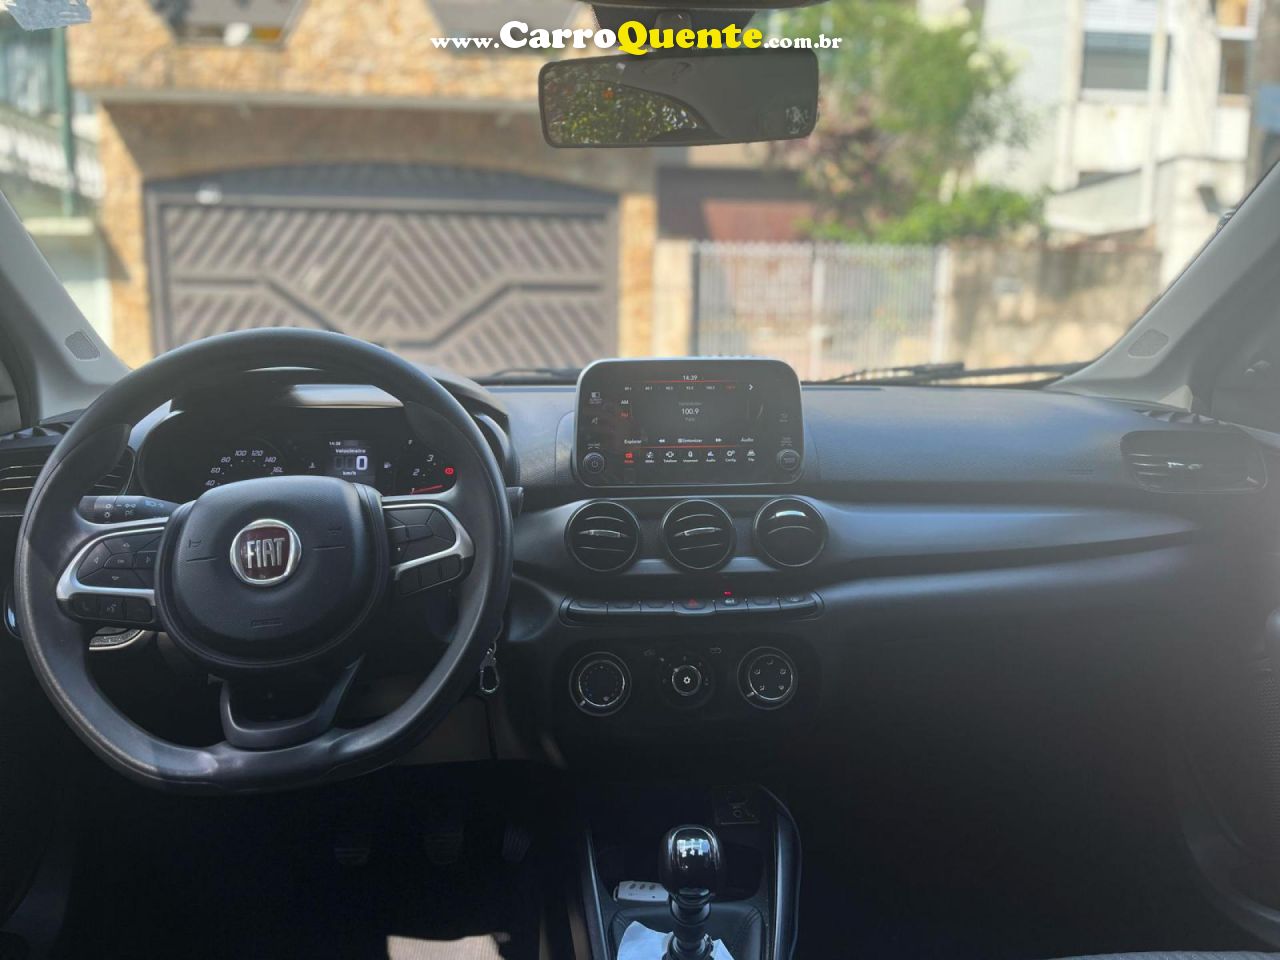 FIAT   CRONOS DRIVE 1.3 8V FLEX   PRETO 2020 1.3 FLEX - Loja